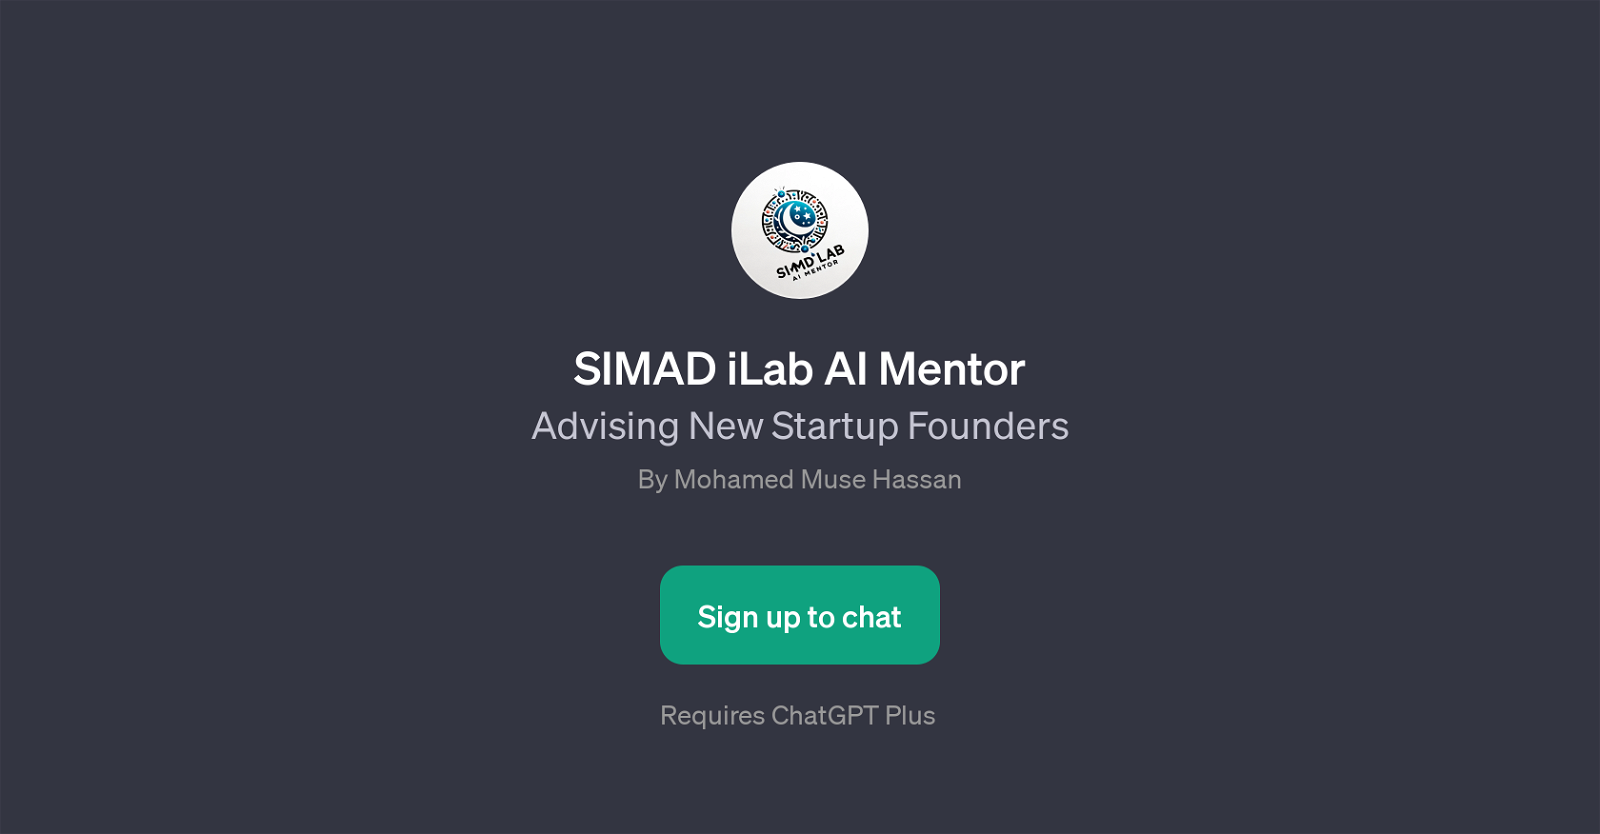 SIMAD iLab AI Mentor website